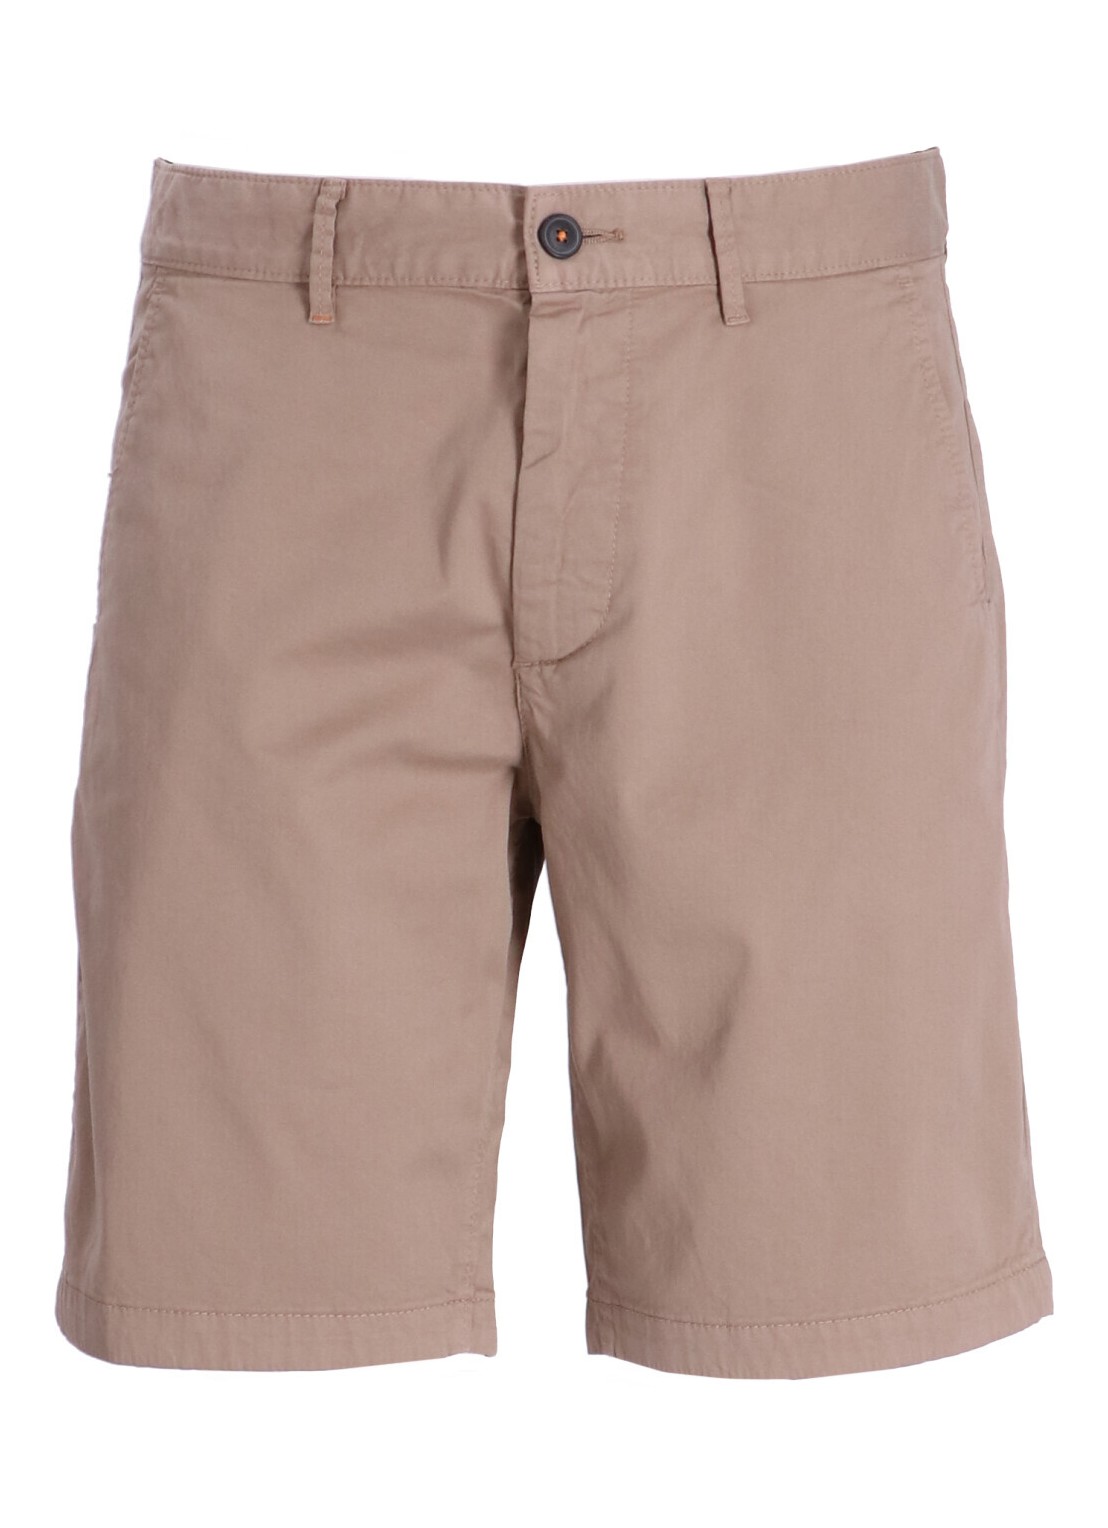 Pantalon corto boss short pant manchino-slim-shorts - 50513026 246 talla 31
 